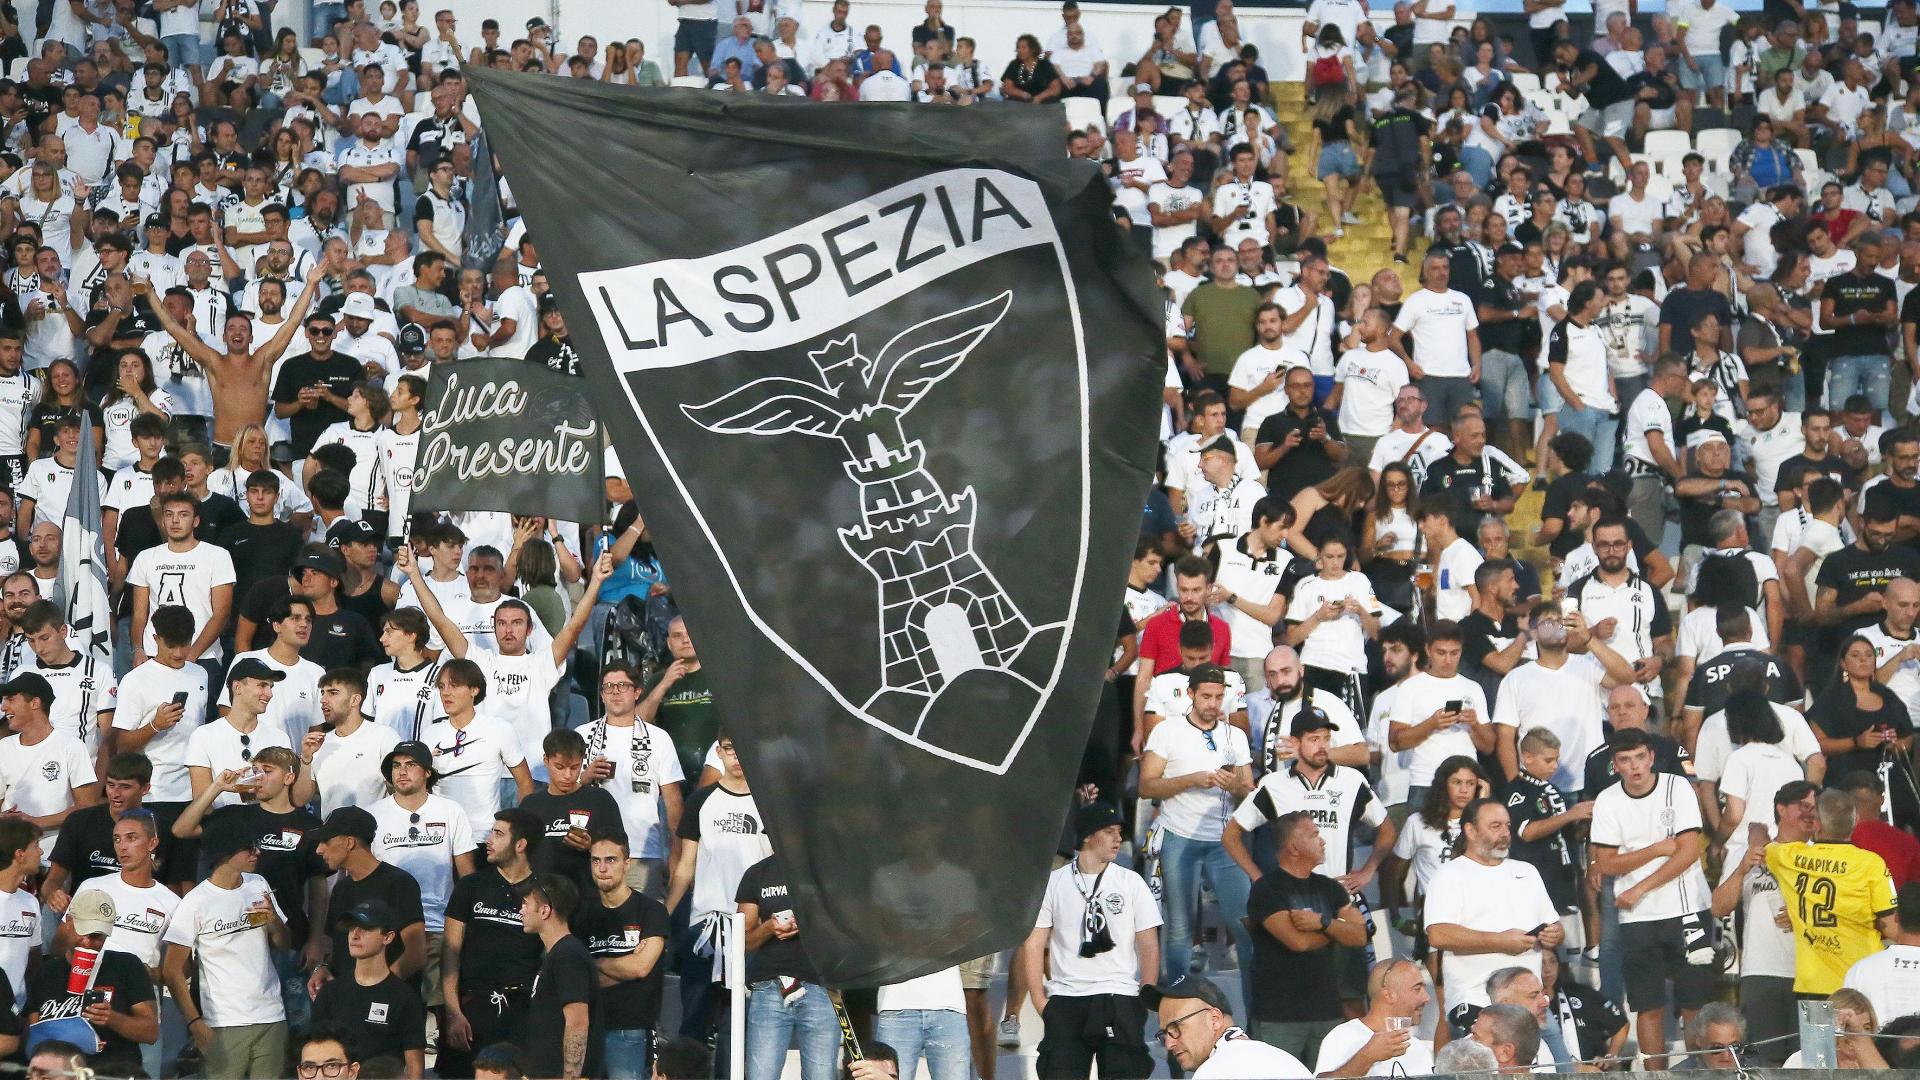 Spezia-Sampdoria: free sale from Tuesday, September 13